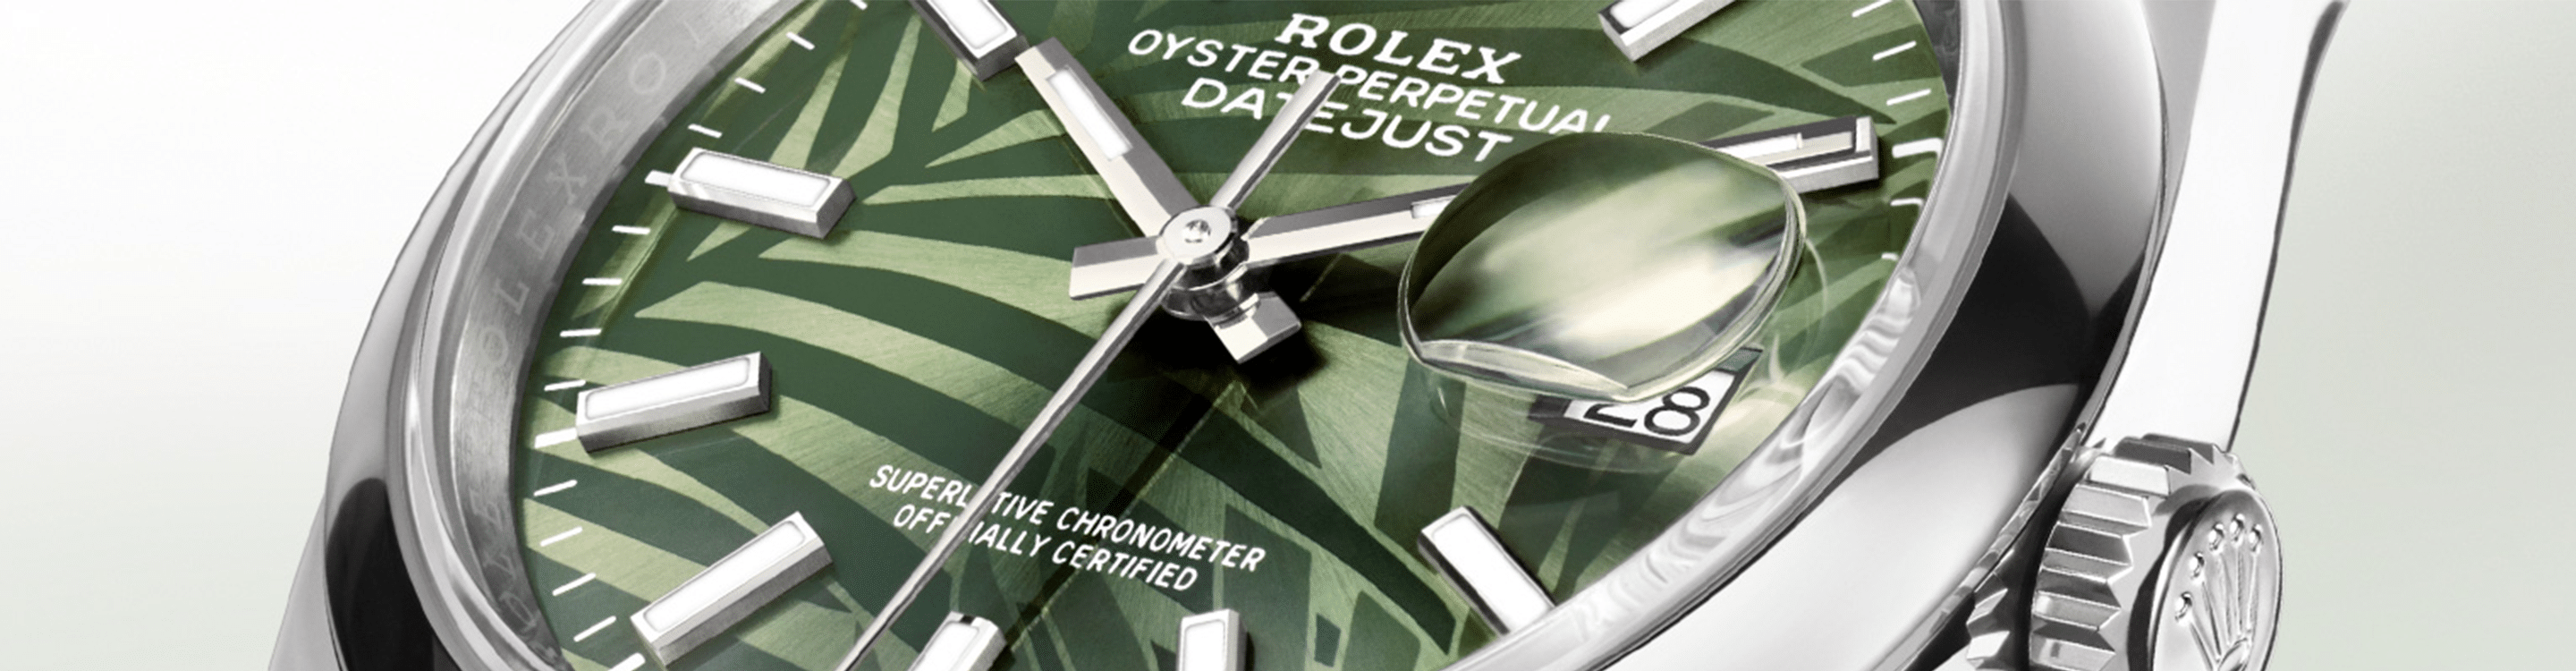 Rolex Datejust CTA Image Desktop